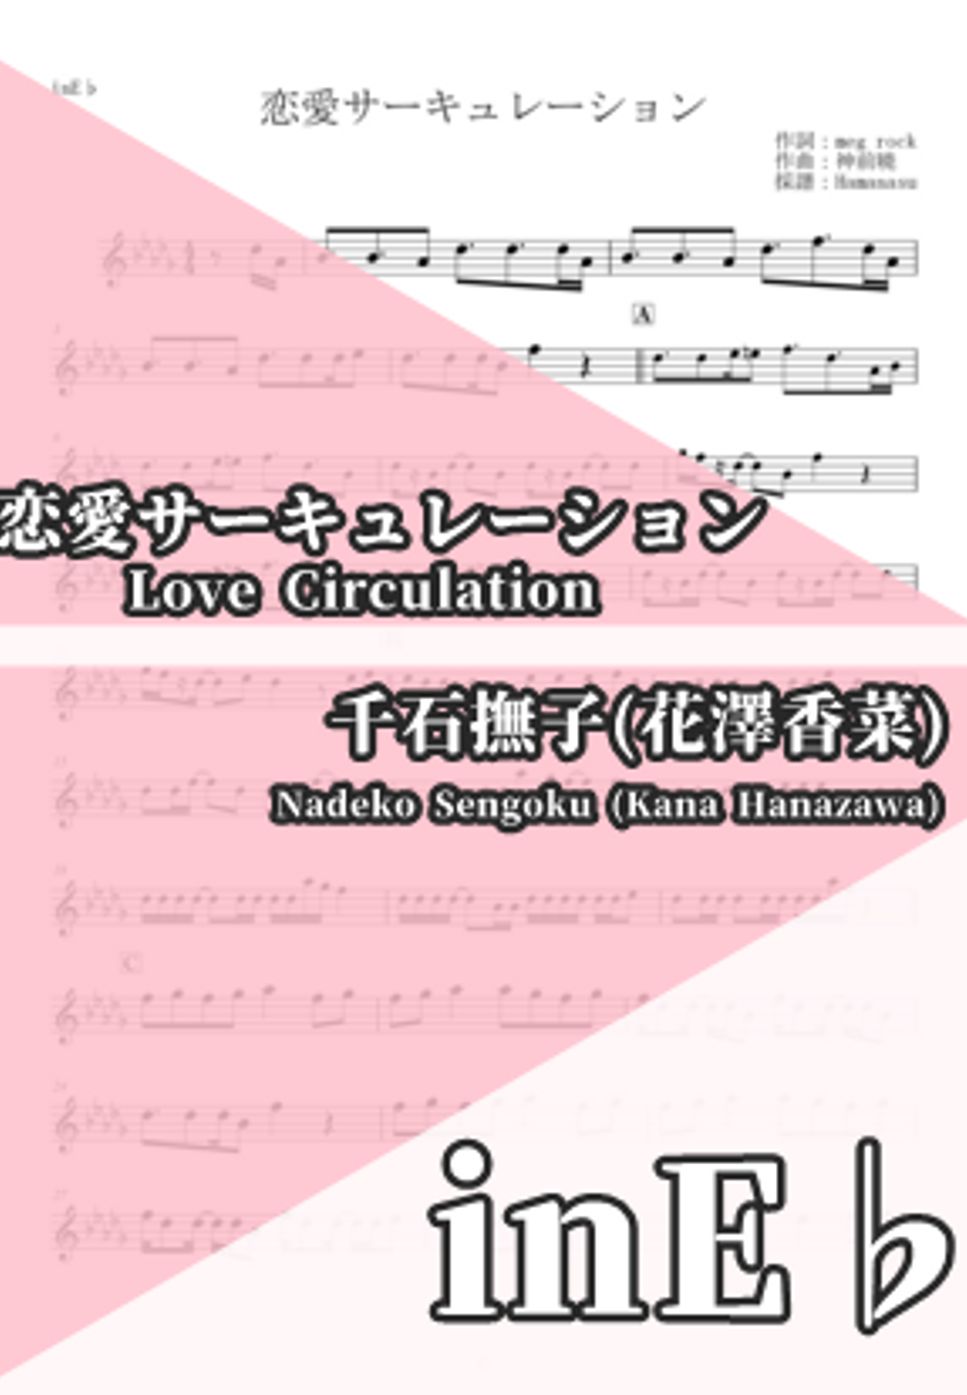 Nadeko Sengoku (Kana Hanazawa) - Love Circulation (inE♭) by Hamanasu